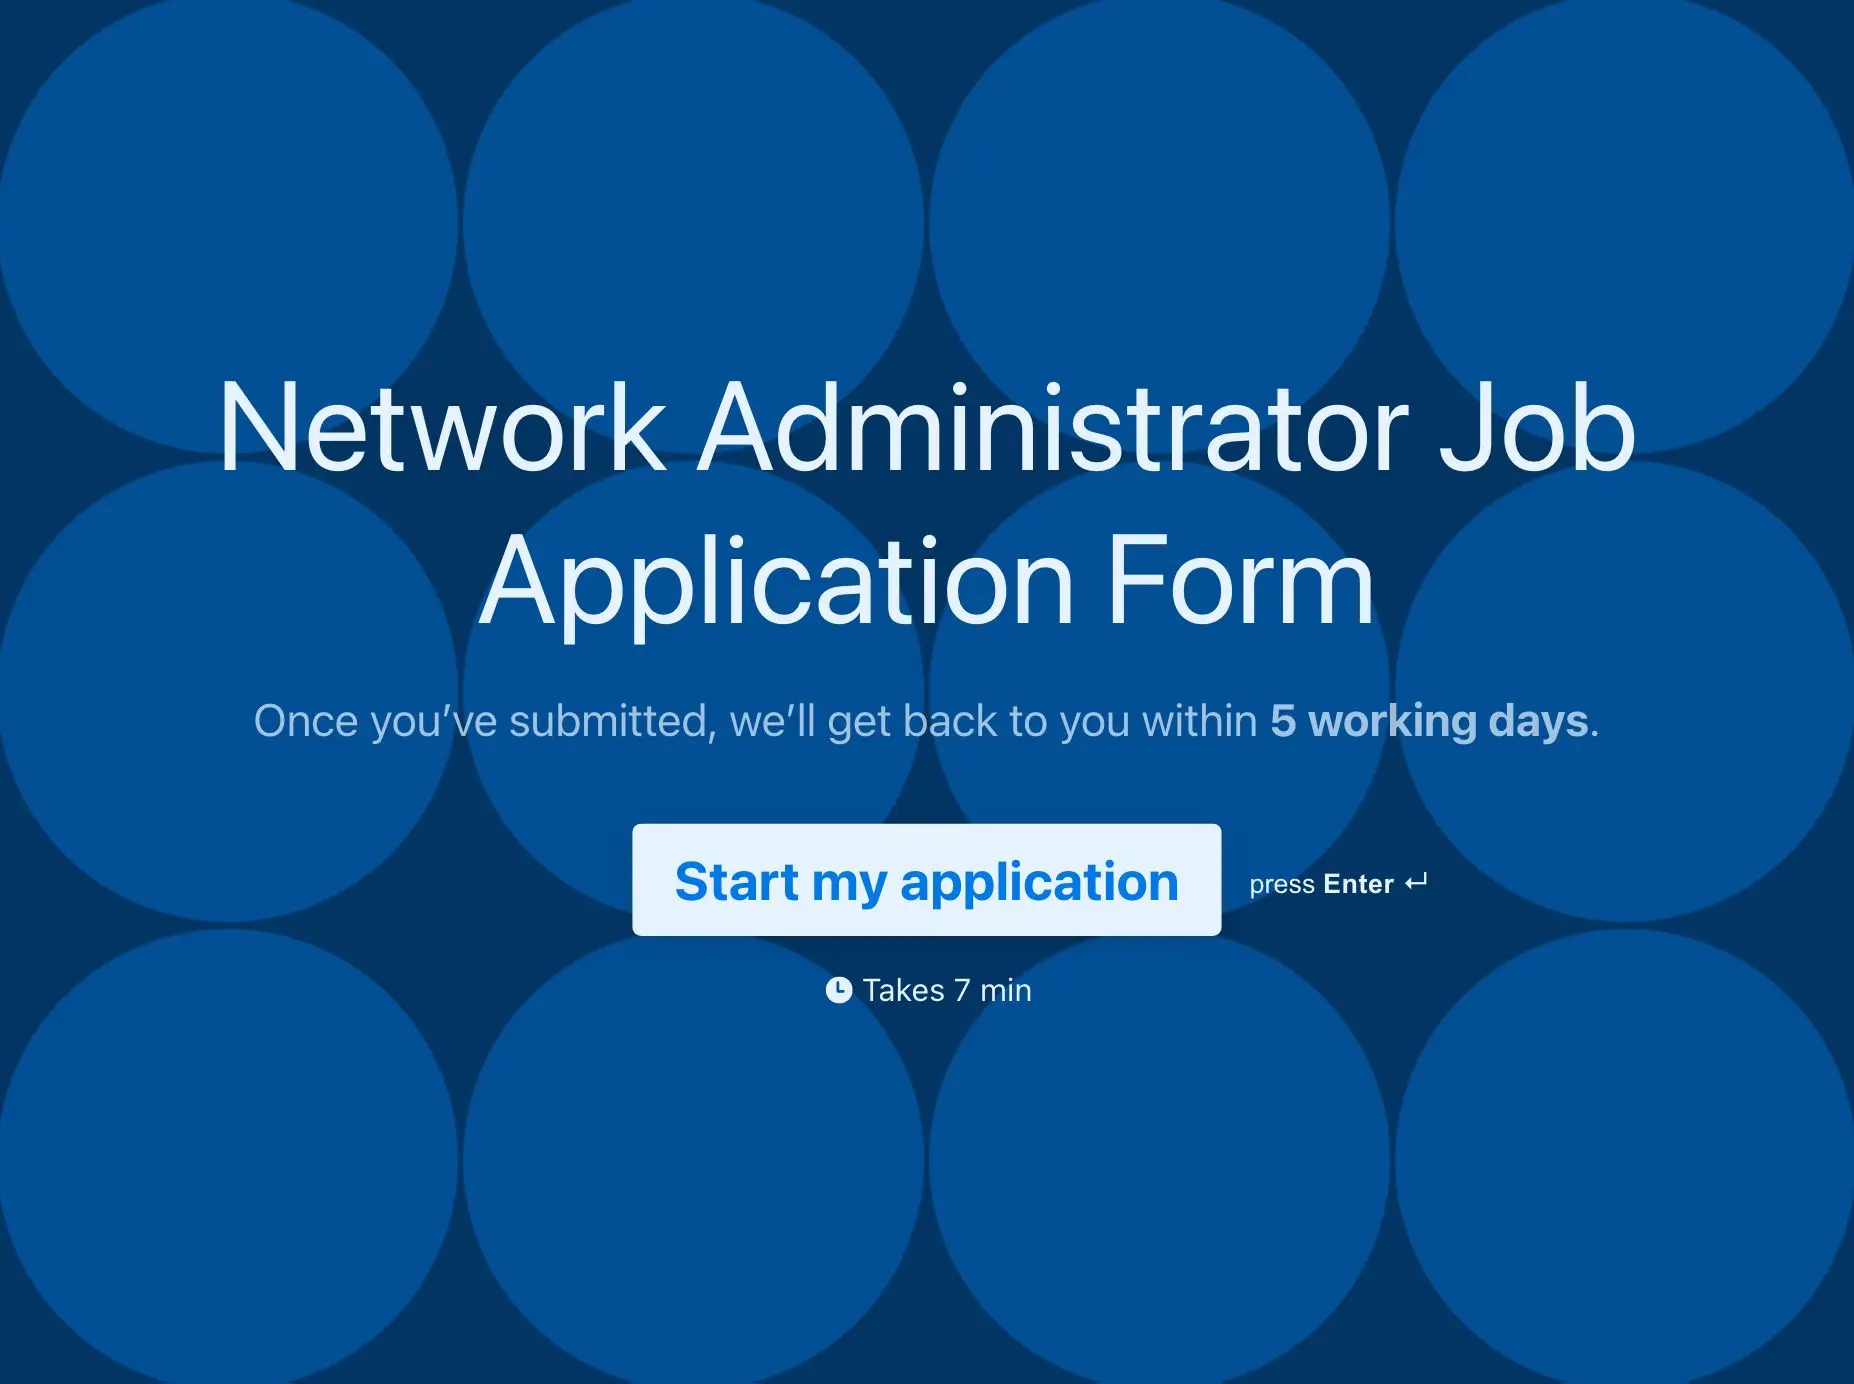 Network Administrator Job Application Form Template Hero